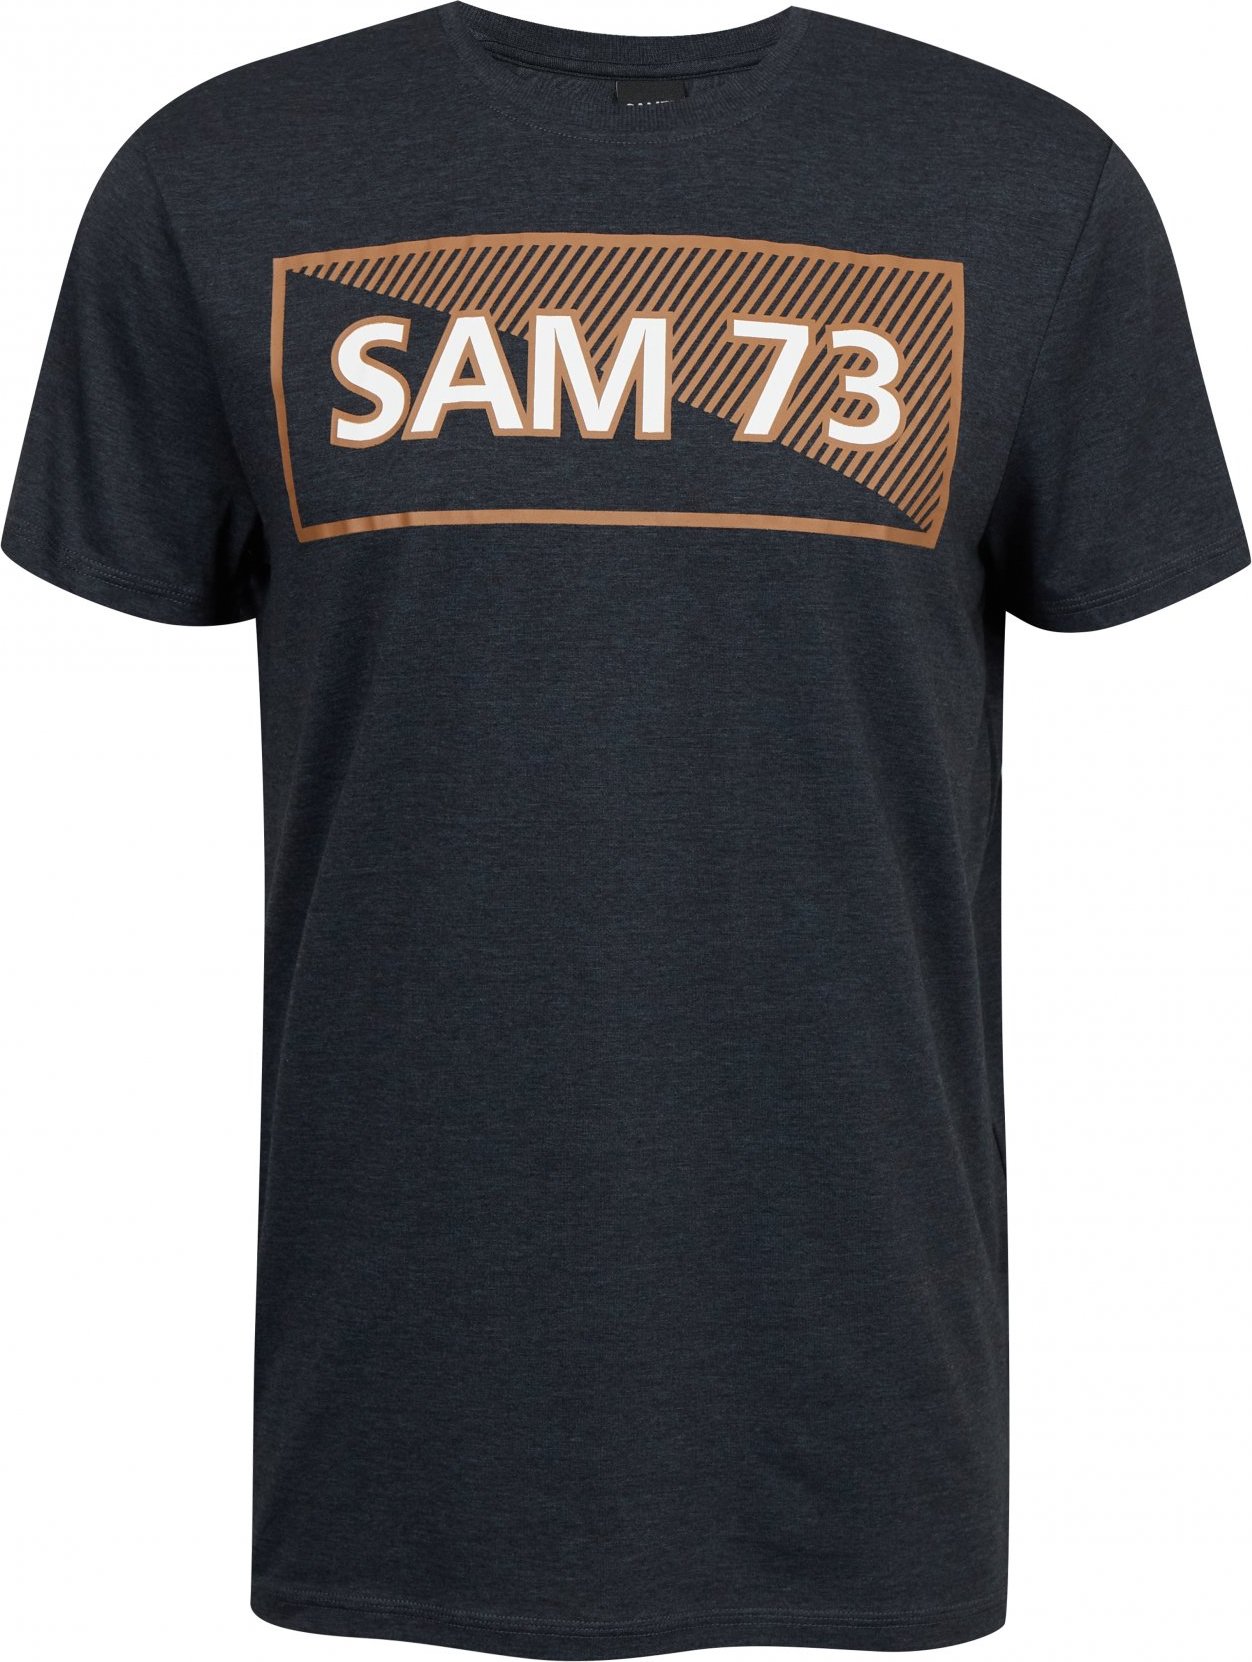 Pánské triko SAM73 fenri černé Velikost: S